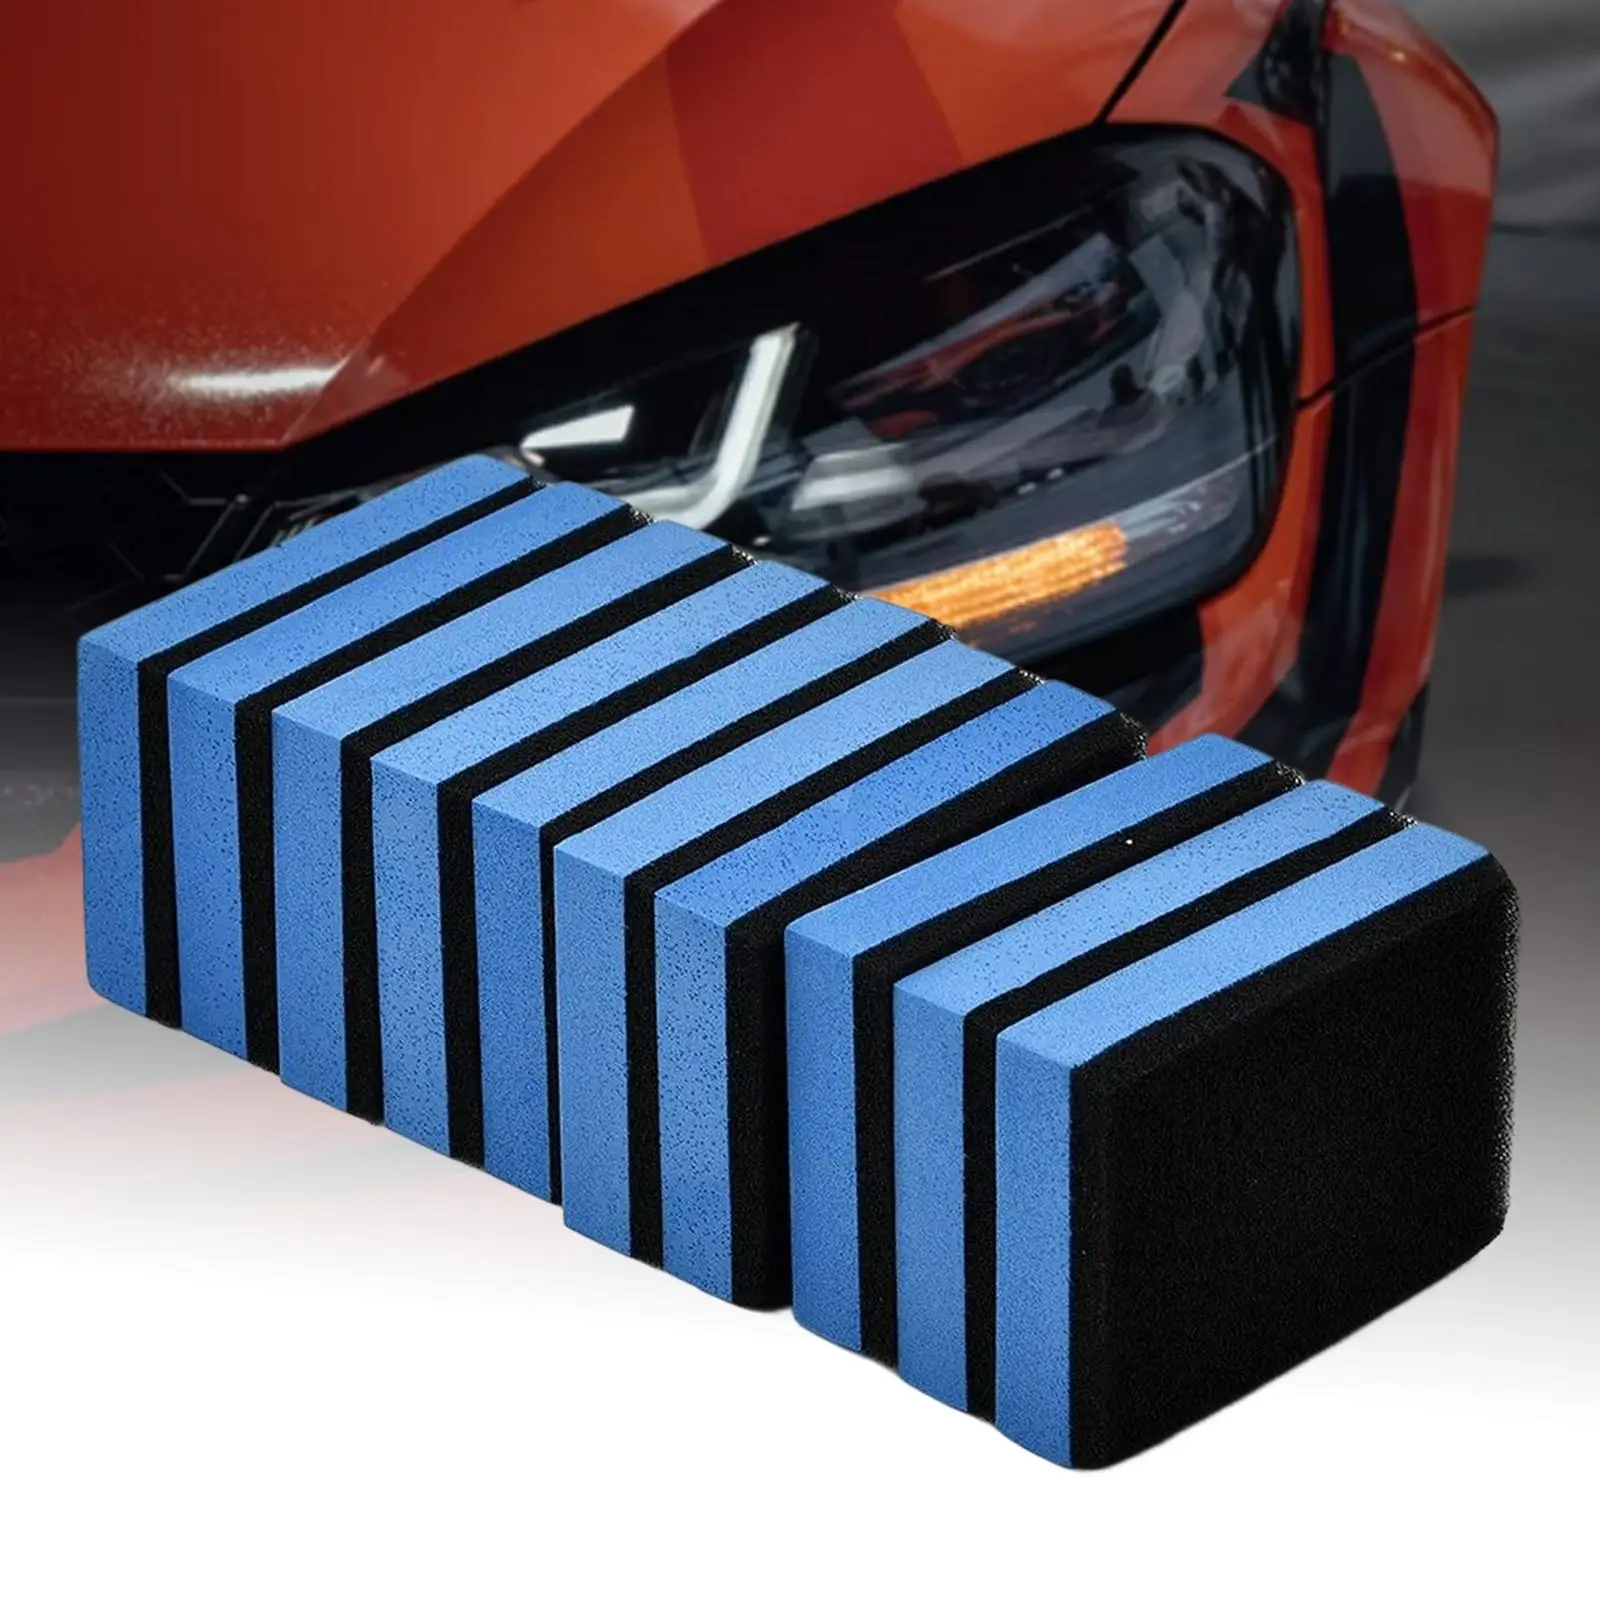 10x Car Waxing Polishing Pads/ Soft Buffing Tool Ceramic Coating Applicator/